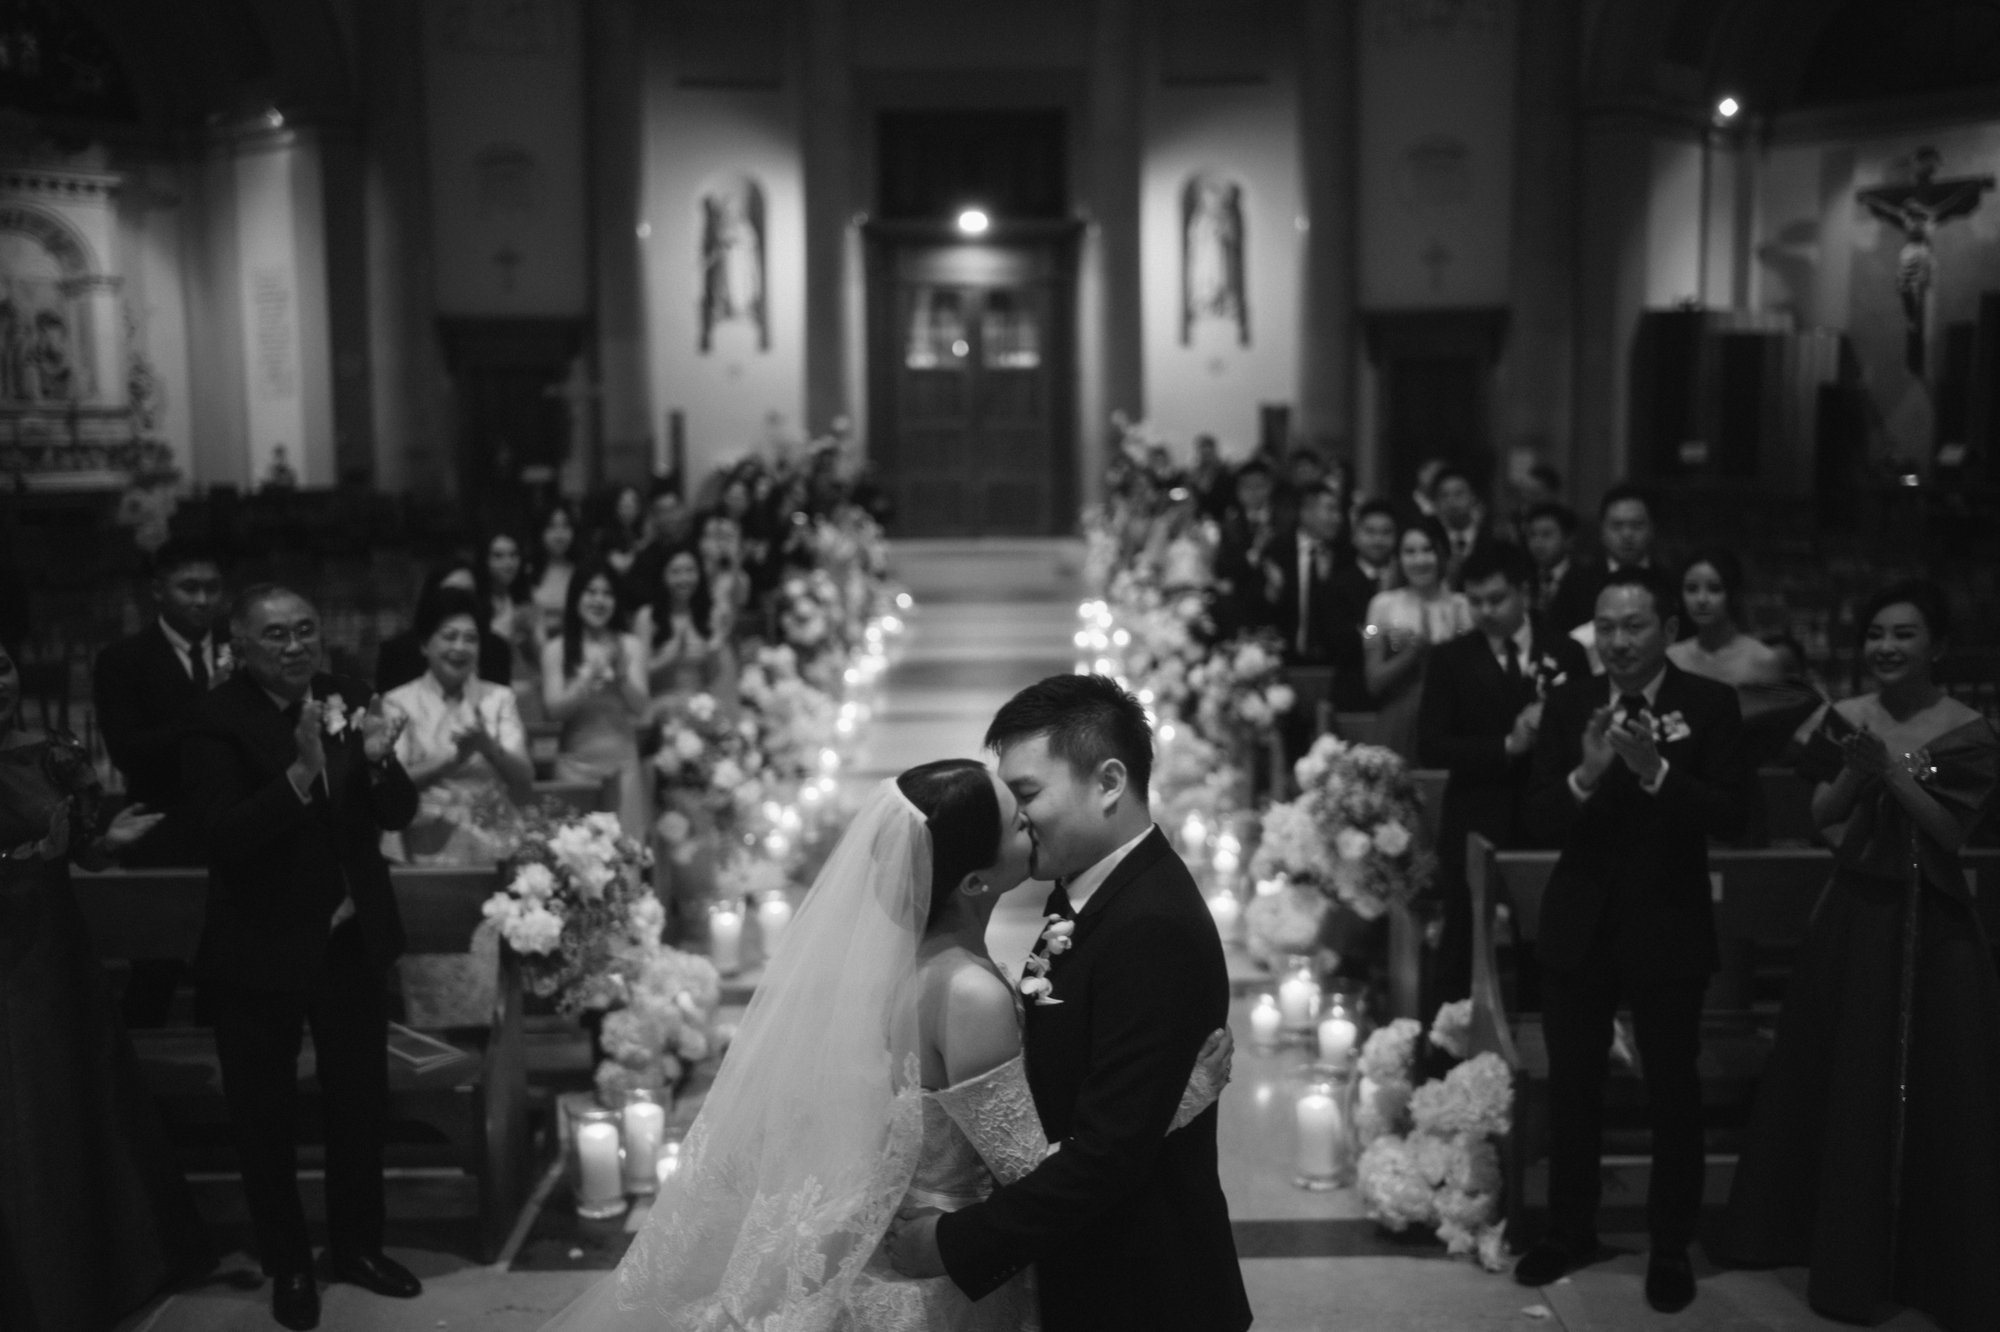 Prawira-Evelyn-Dolomites-Italy-Santre wedding-Yefta Gunawan-Jeriko MUA-Carol Kuntjoro Photography-62.jpg